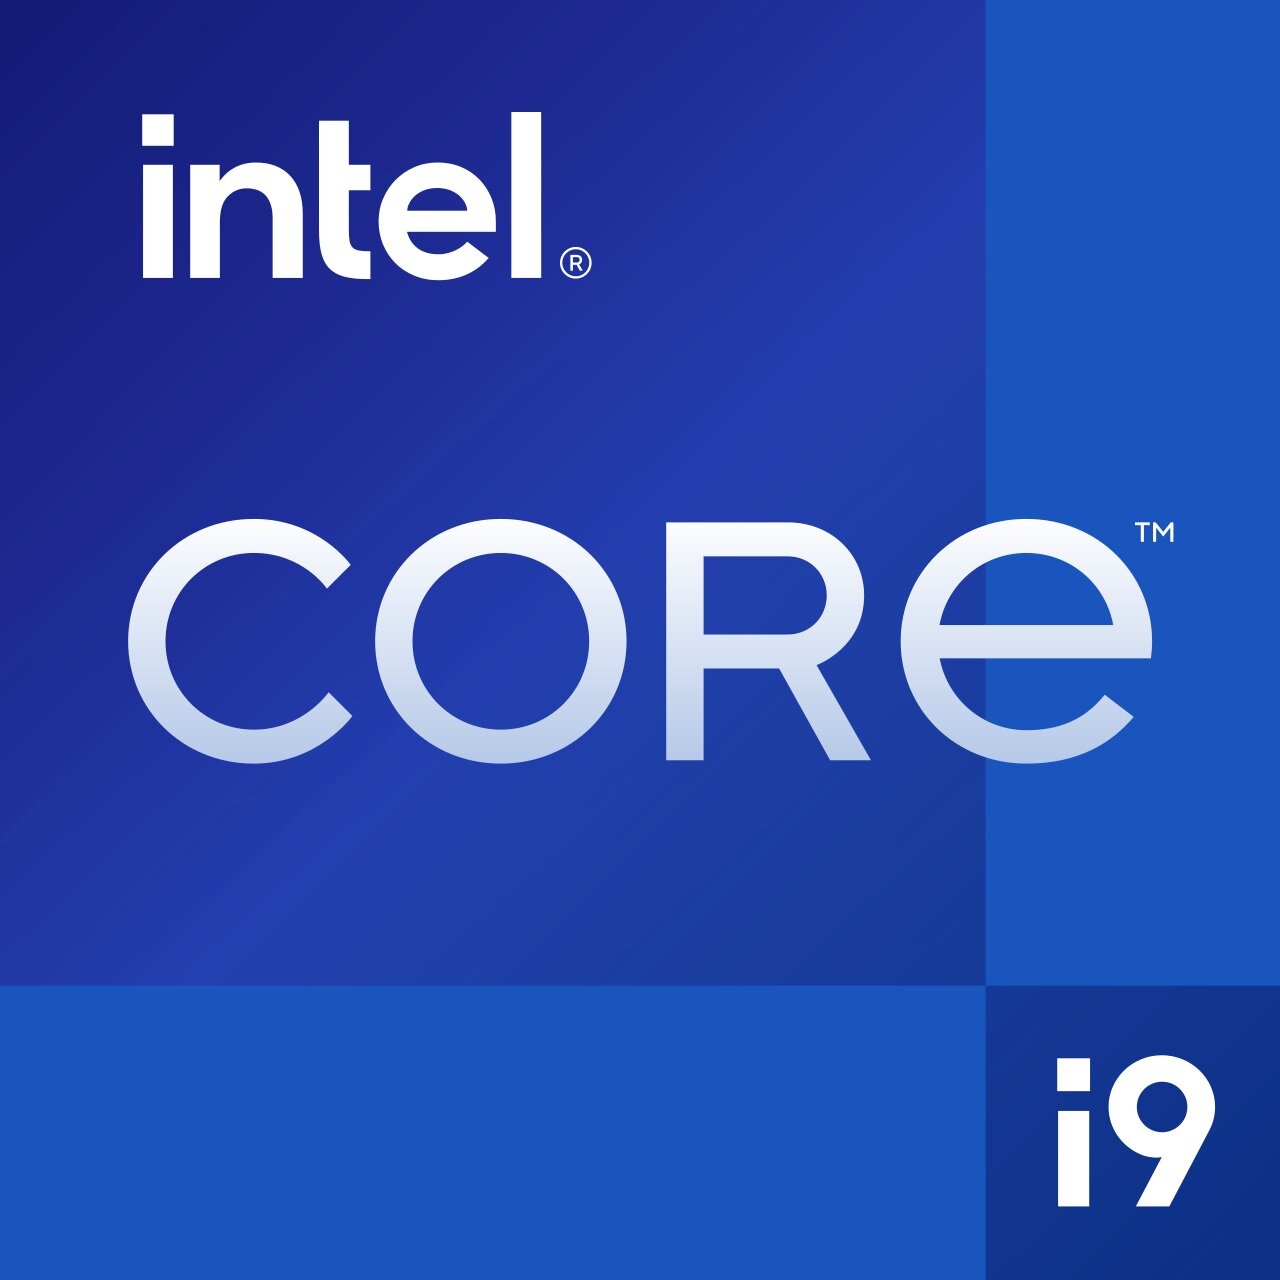 Процессор Intel Core i9-10900K LGA1200 10 x 3700 МГц